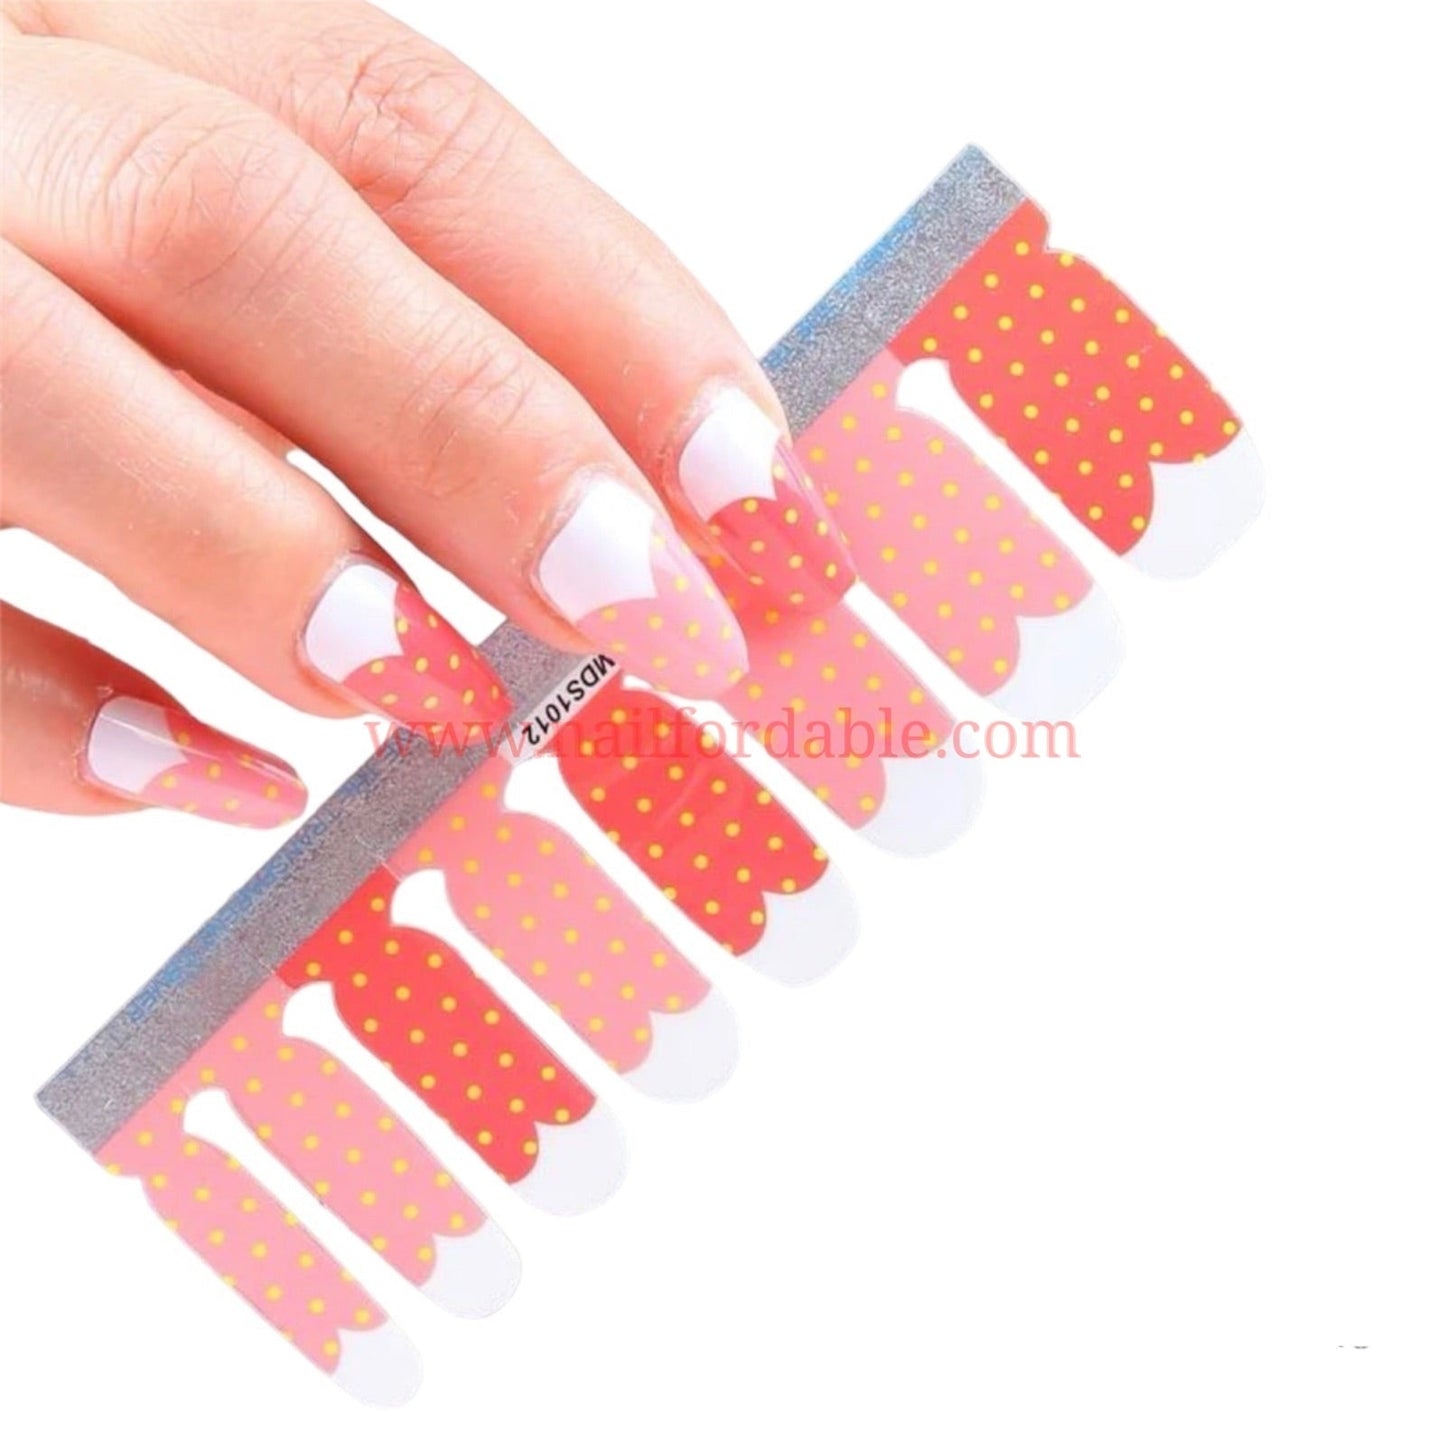 Strawberry like Nail Wraps | Semi Cured Gel Wraps | Gel Nail Wraps |Nail Polish | Nail Stickers